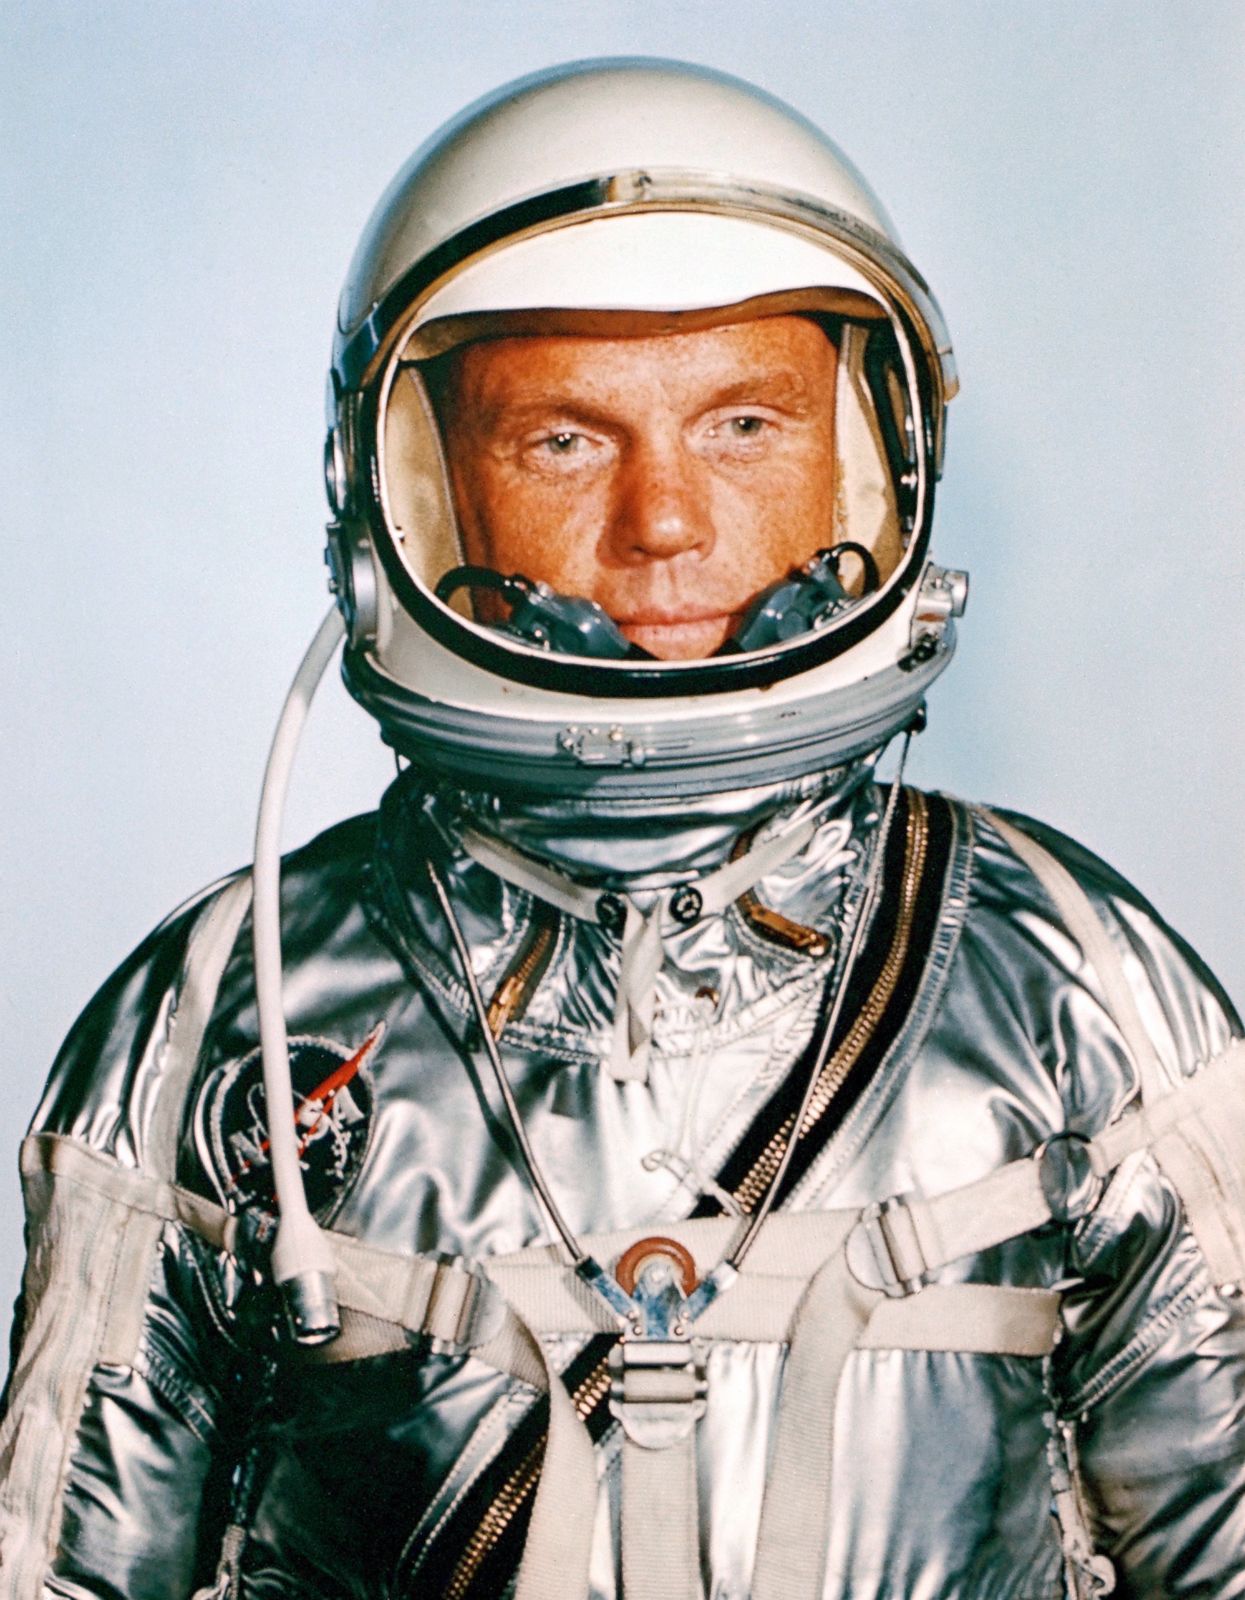 Astronaut and Senator John Glenn's Life in Pictures Photos Image 21